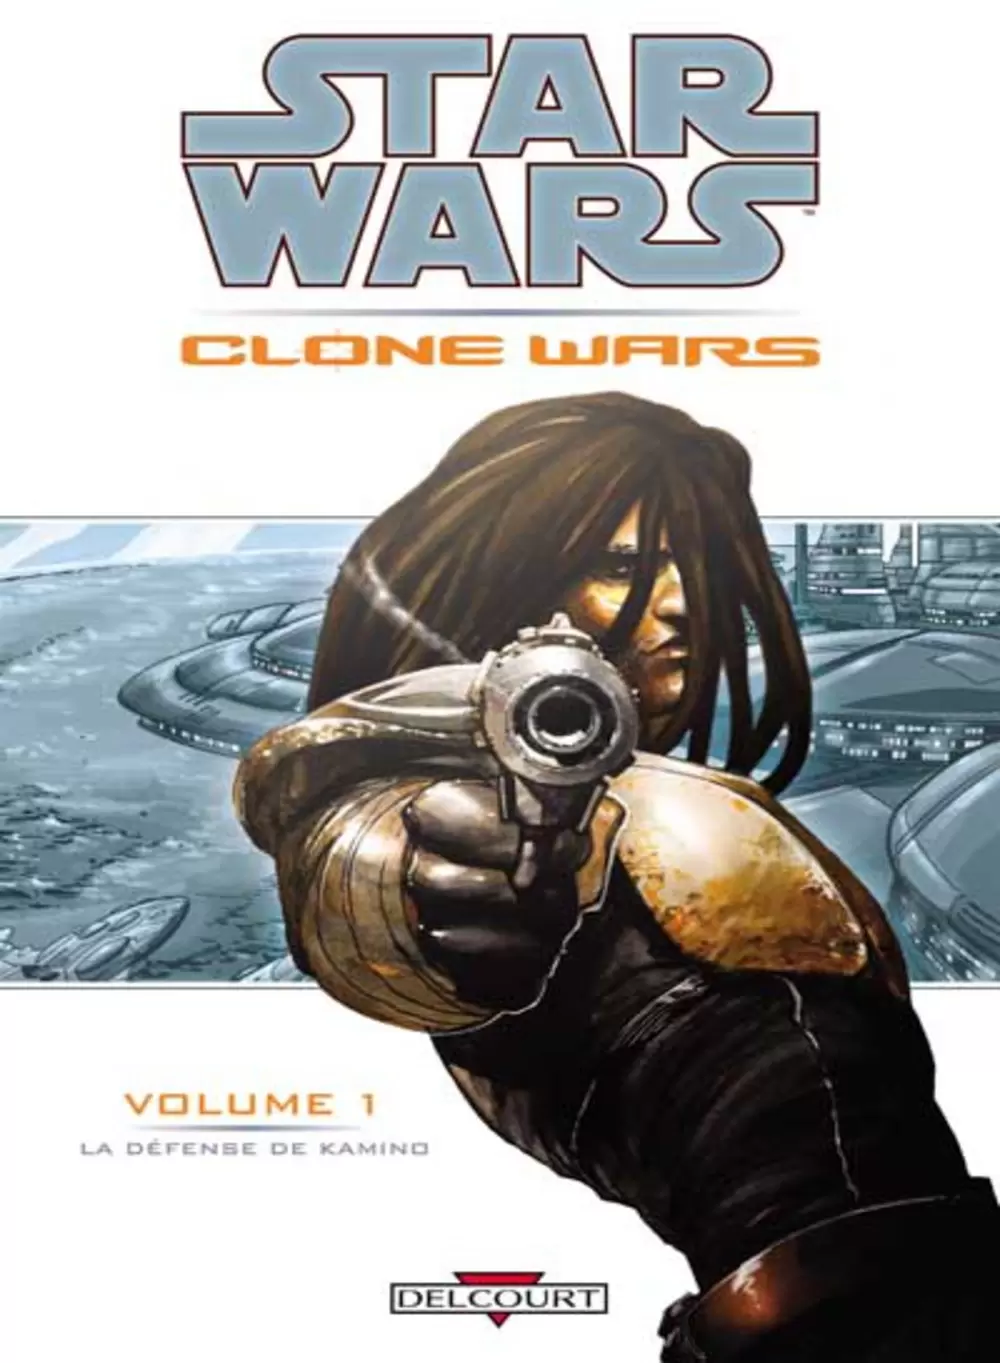 Star Wars - Delcourt - Clone Wars : La défense de Kamino